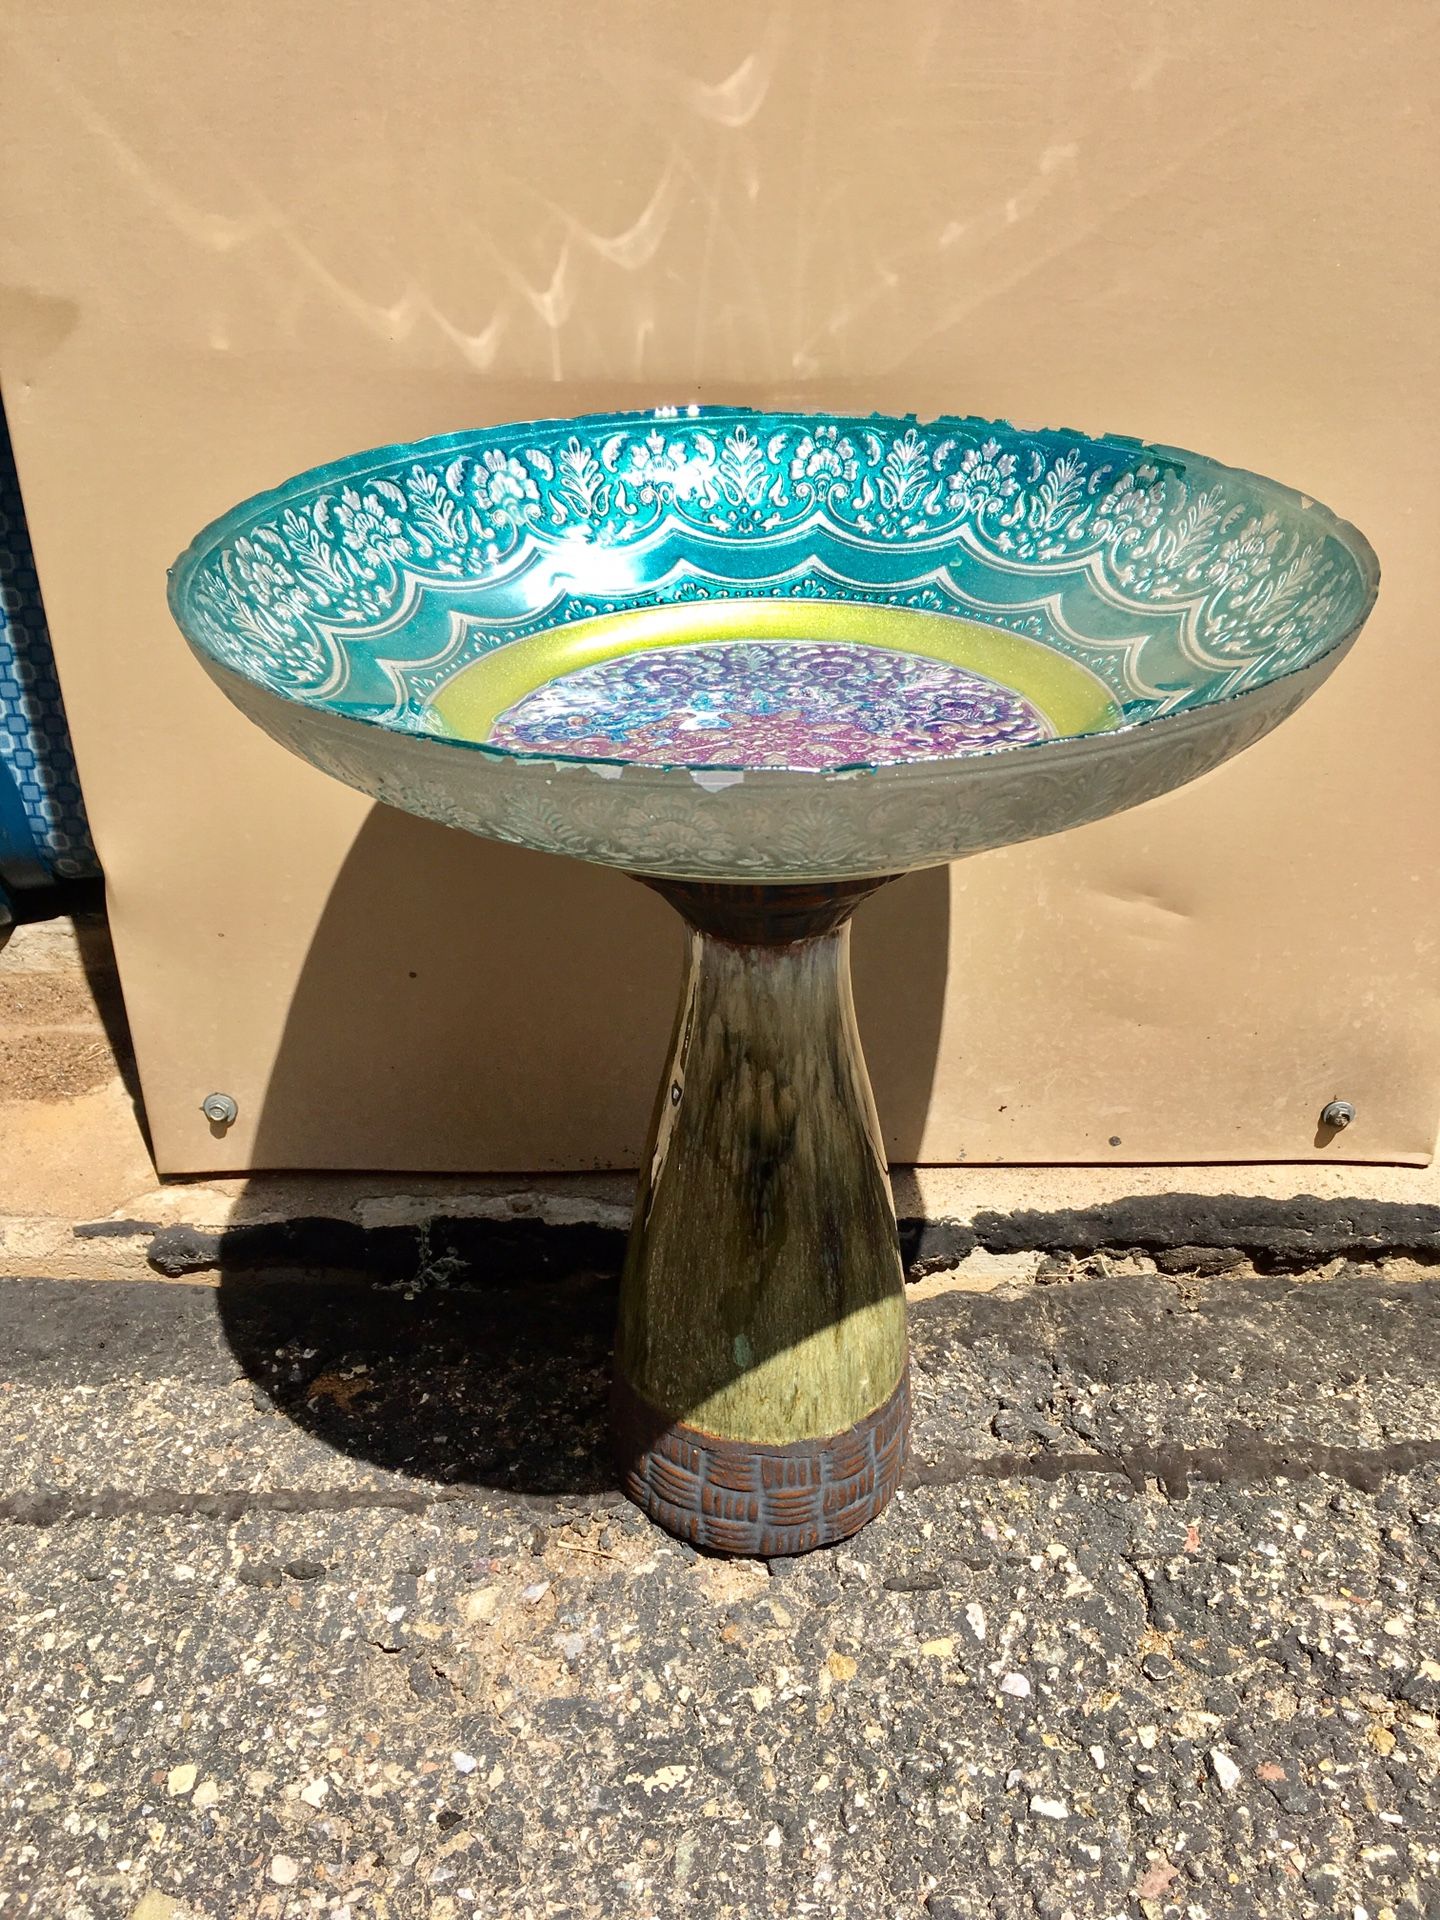 Bird Bath or Feeder for your garden! ! So cute...Glass Ornate bowl choose a base!